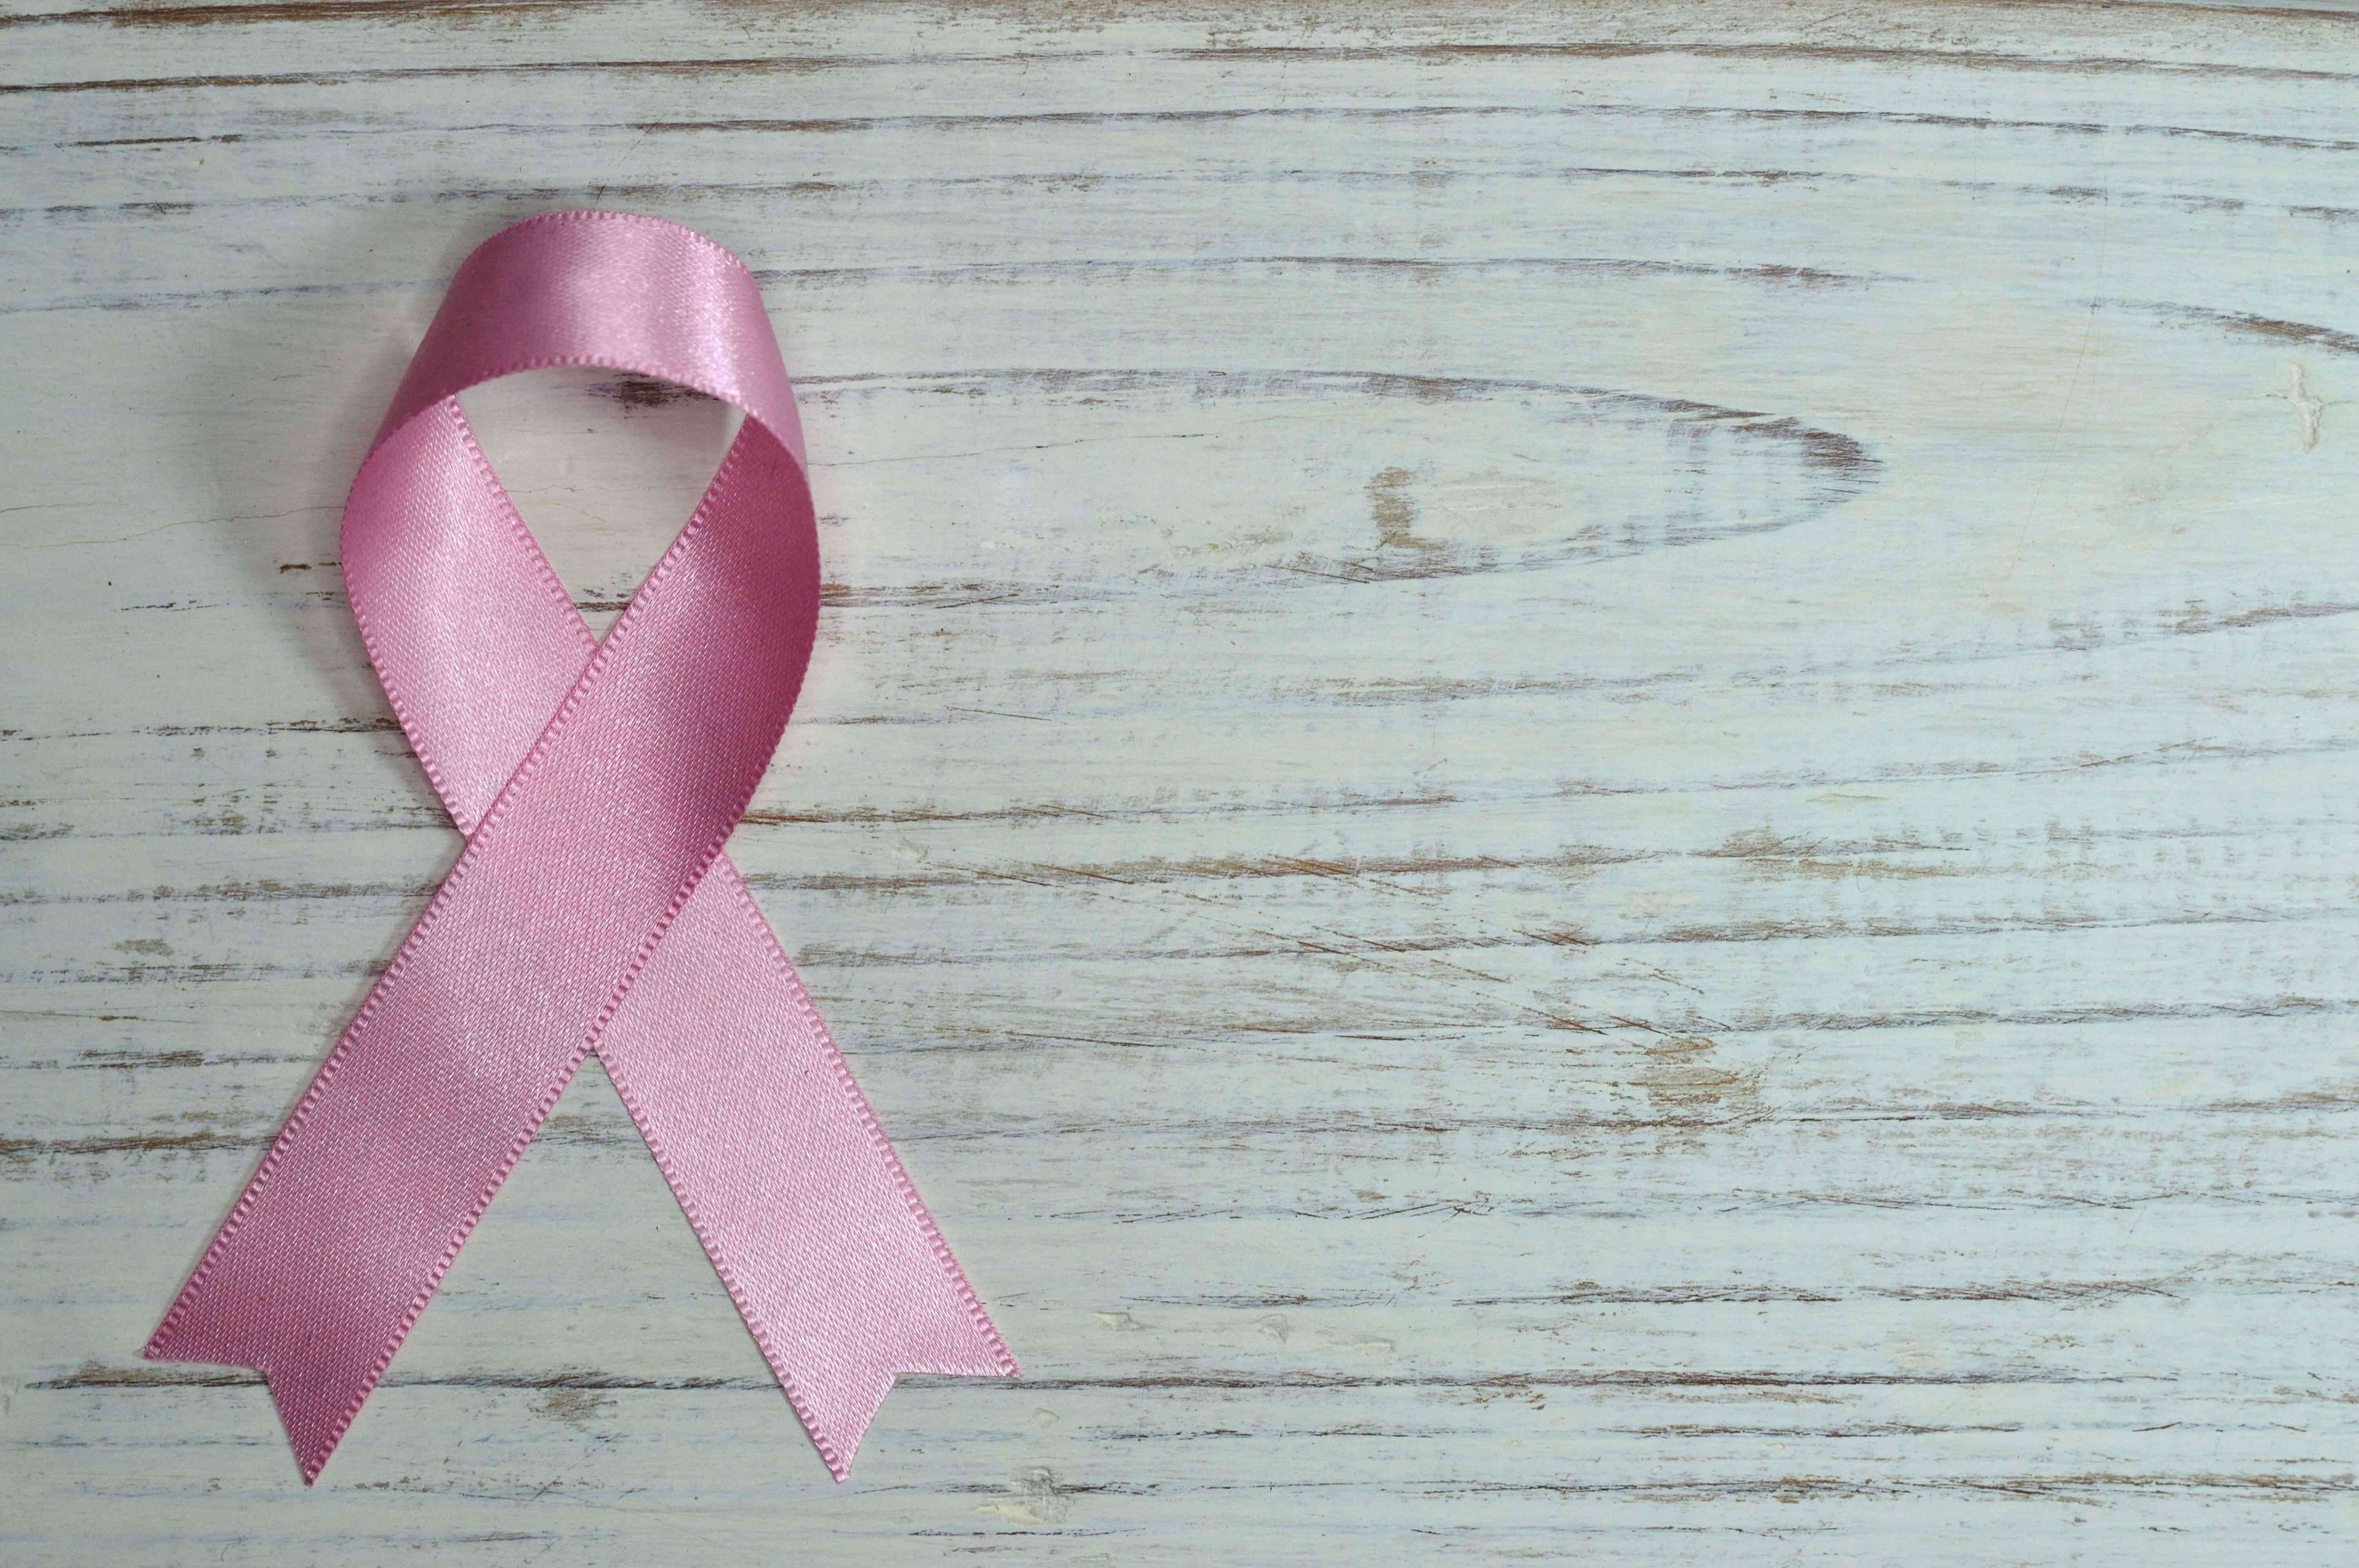 Objawy raka piersi